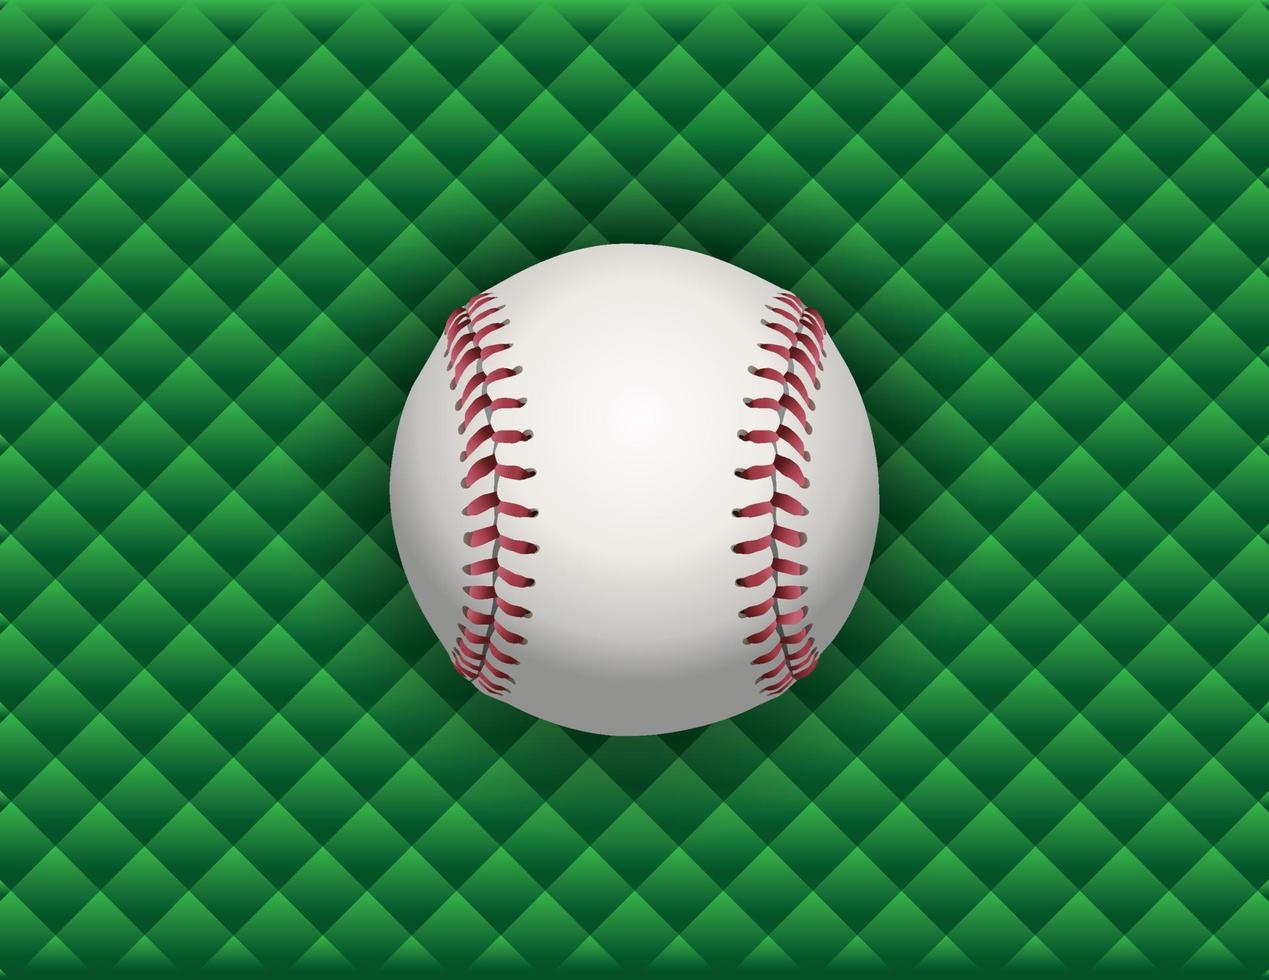 ilustración de béisbol sobre un fondo verde a cuadros vector